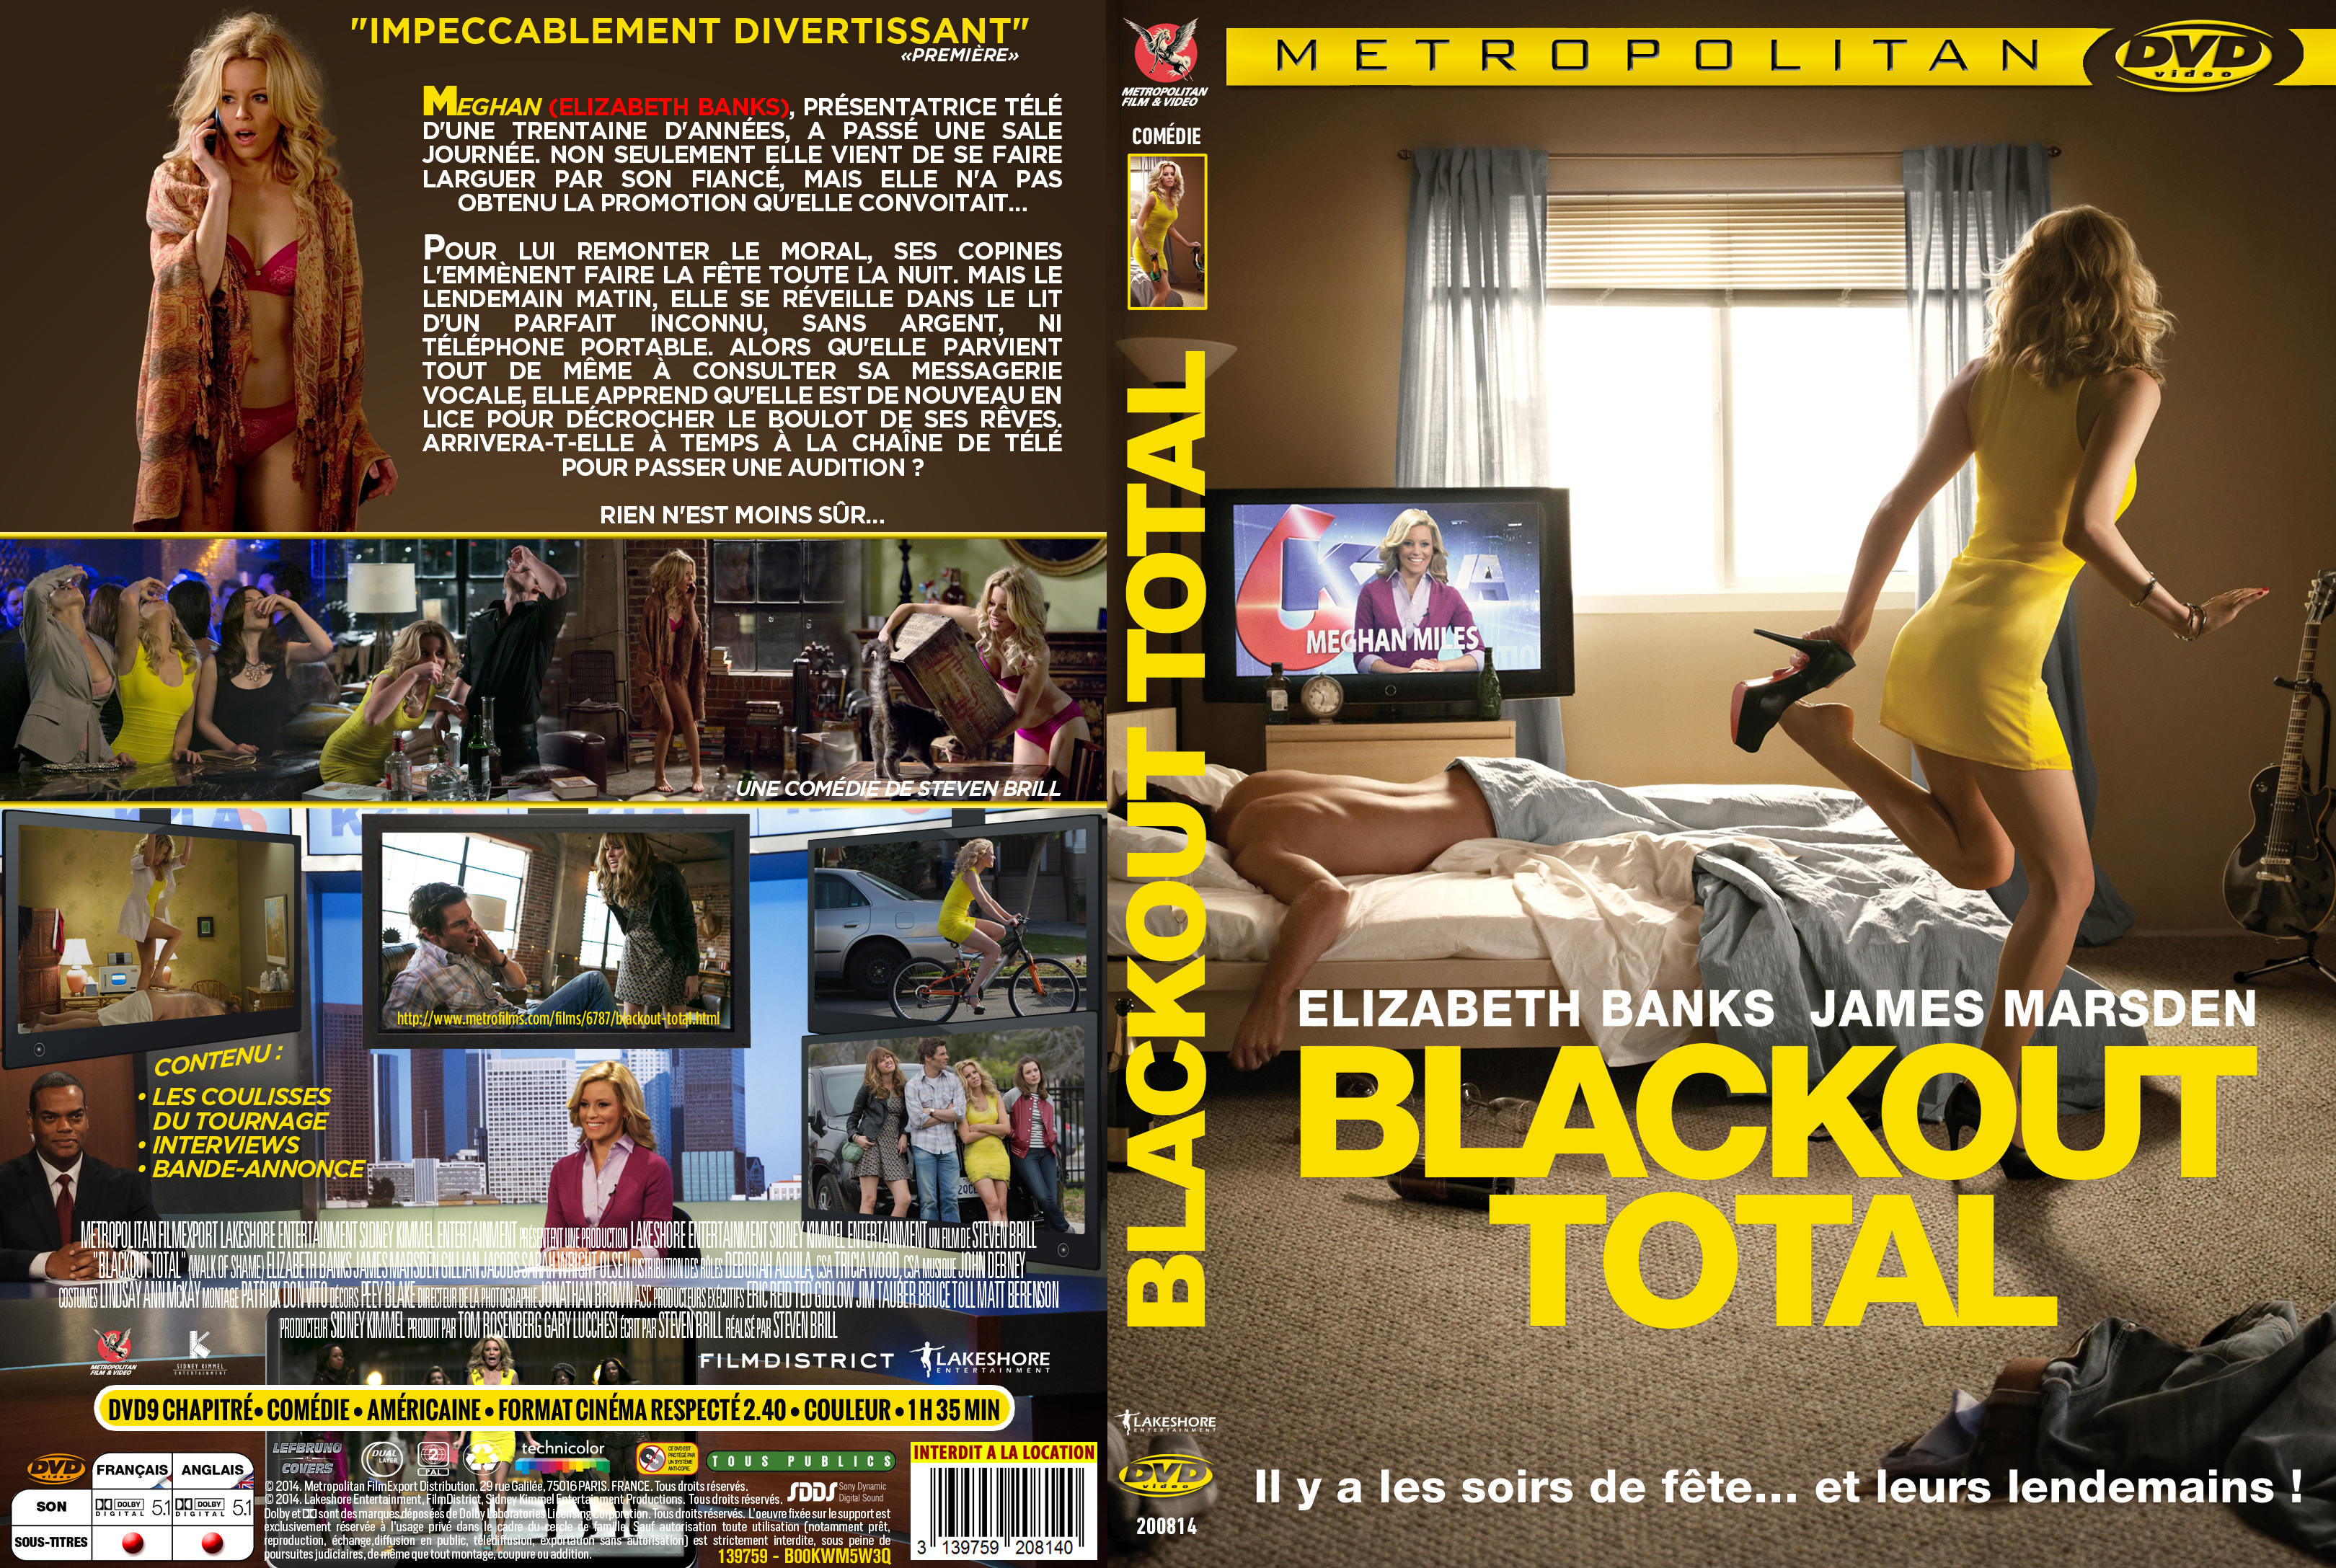 Jaquette DVD Blackout Total custom